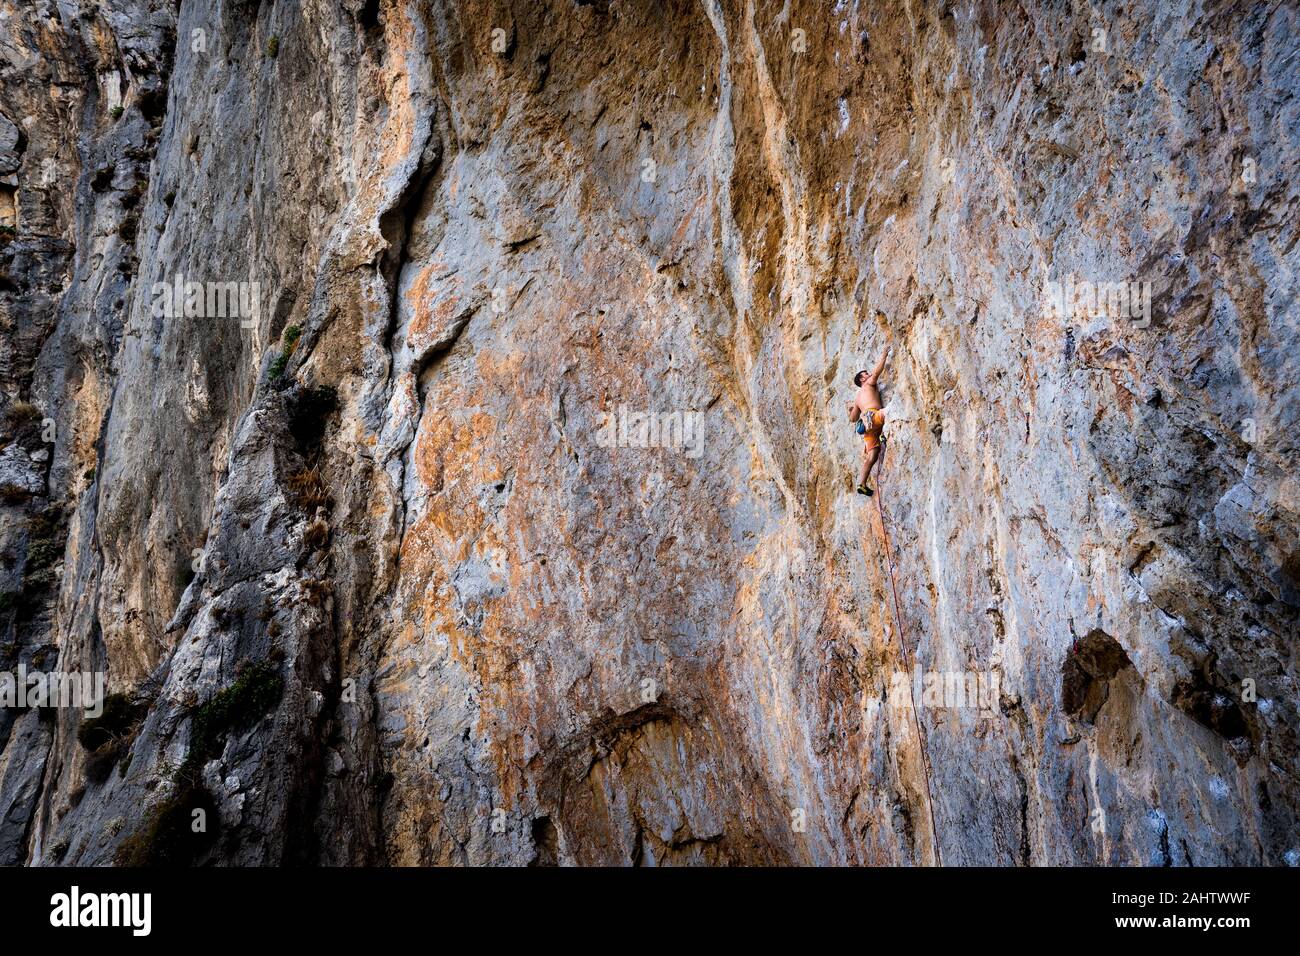 Man Rock Climbing on Rock Face in Kalydna on Kalymnos Island, Greece Stock Photo